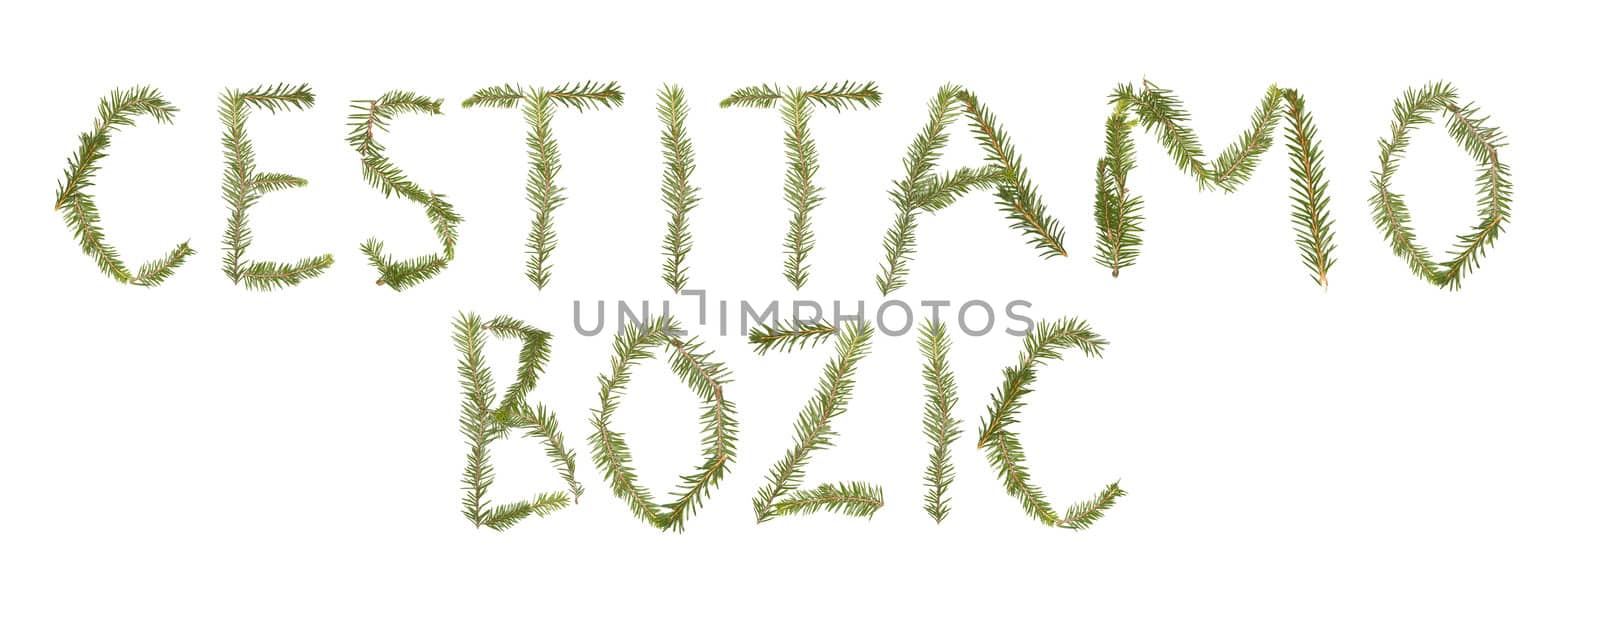 Spruce twigs forming the phrase 'Cestitamo Bozic' by gemenacom